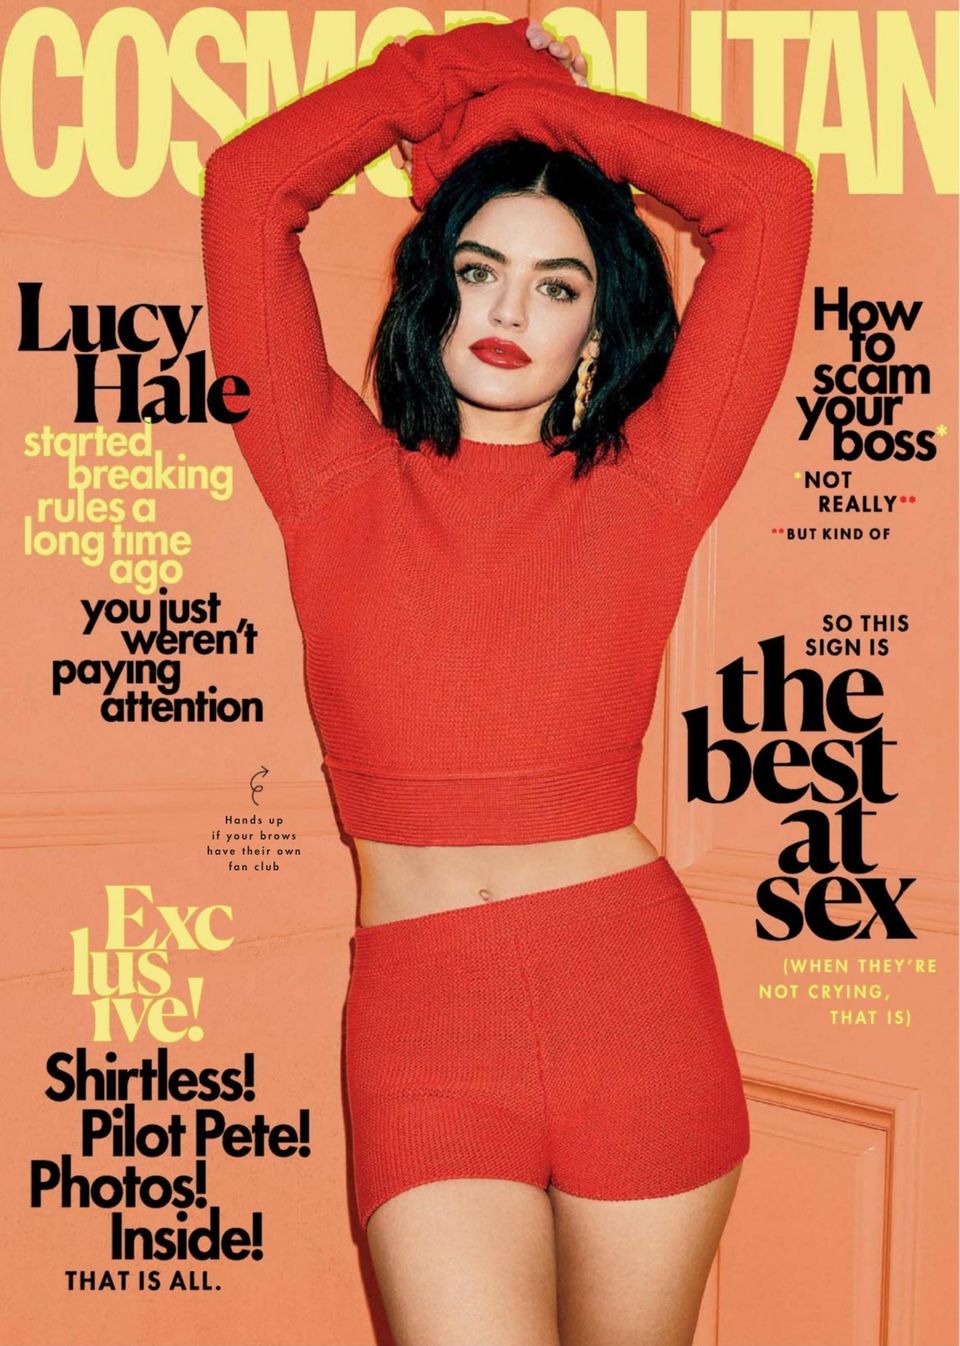 Cover of Cosmopolitan March 2020